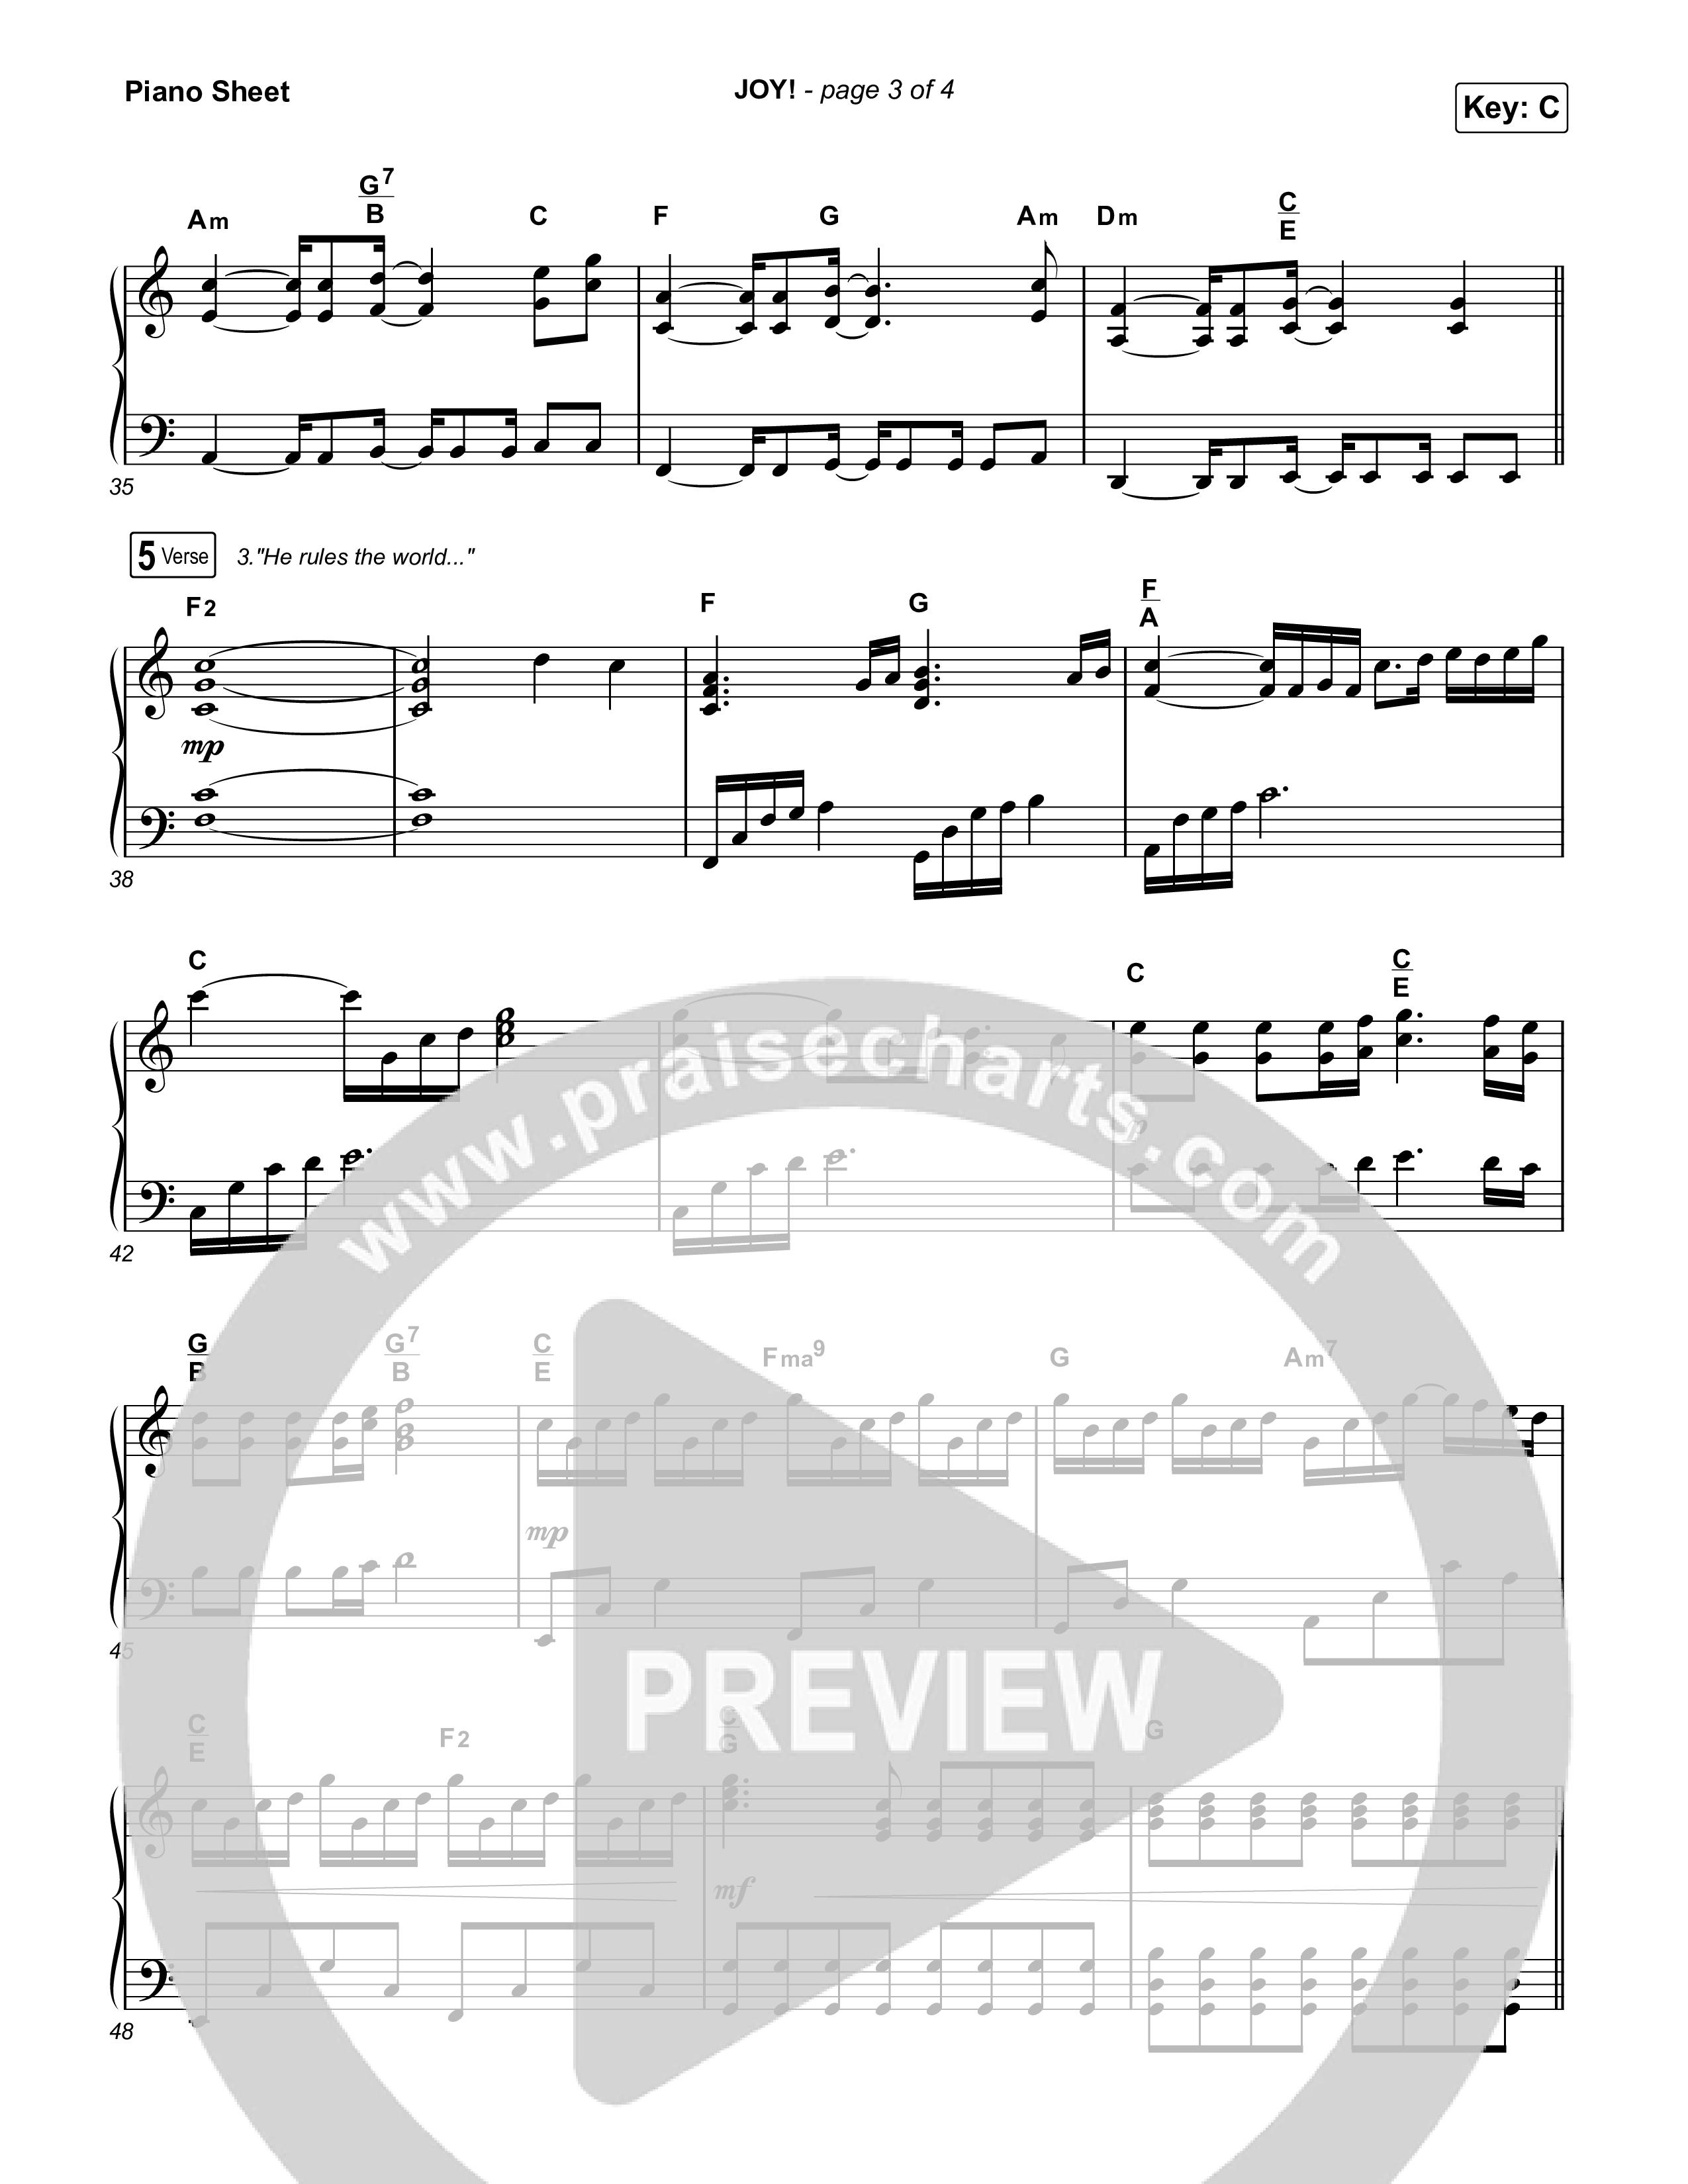 JOY! Piano Sheet (ELEVATION RHYTHM / Elevation Worship)